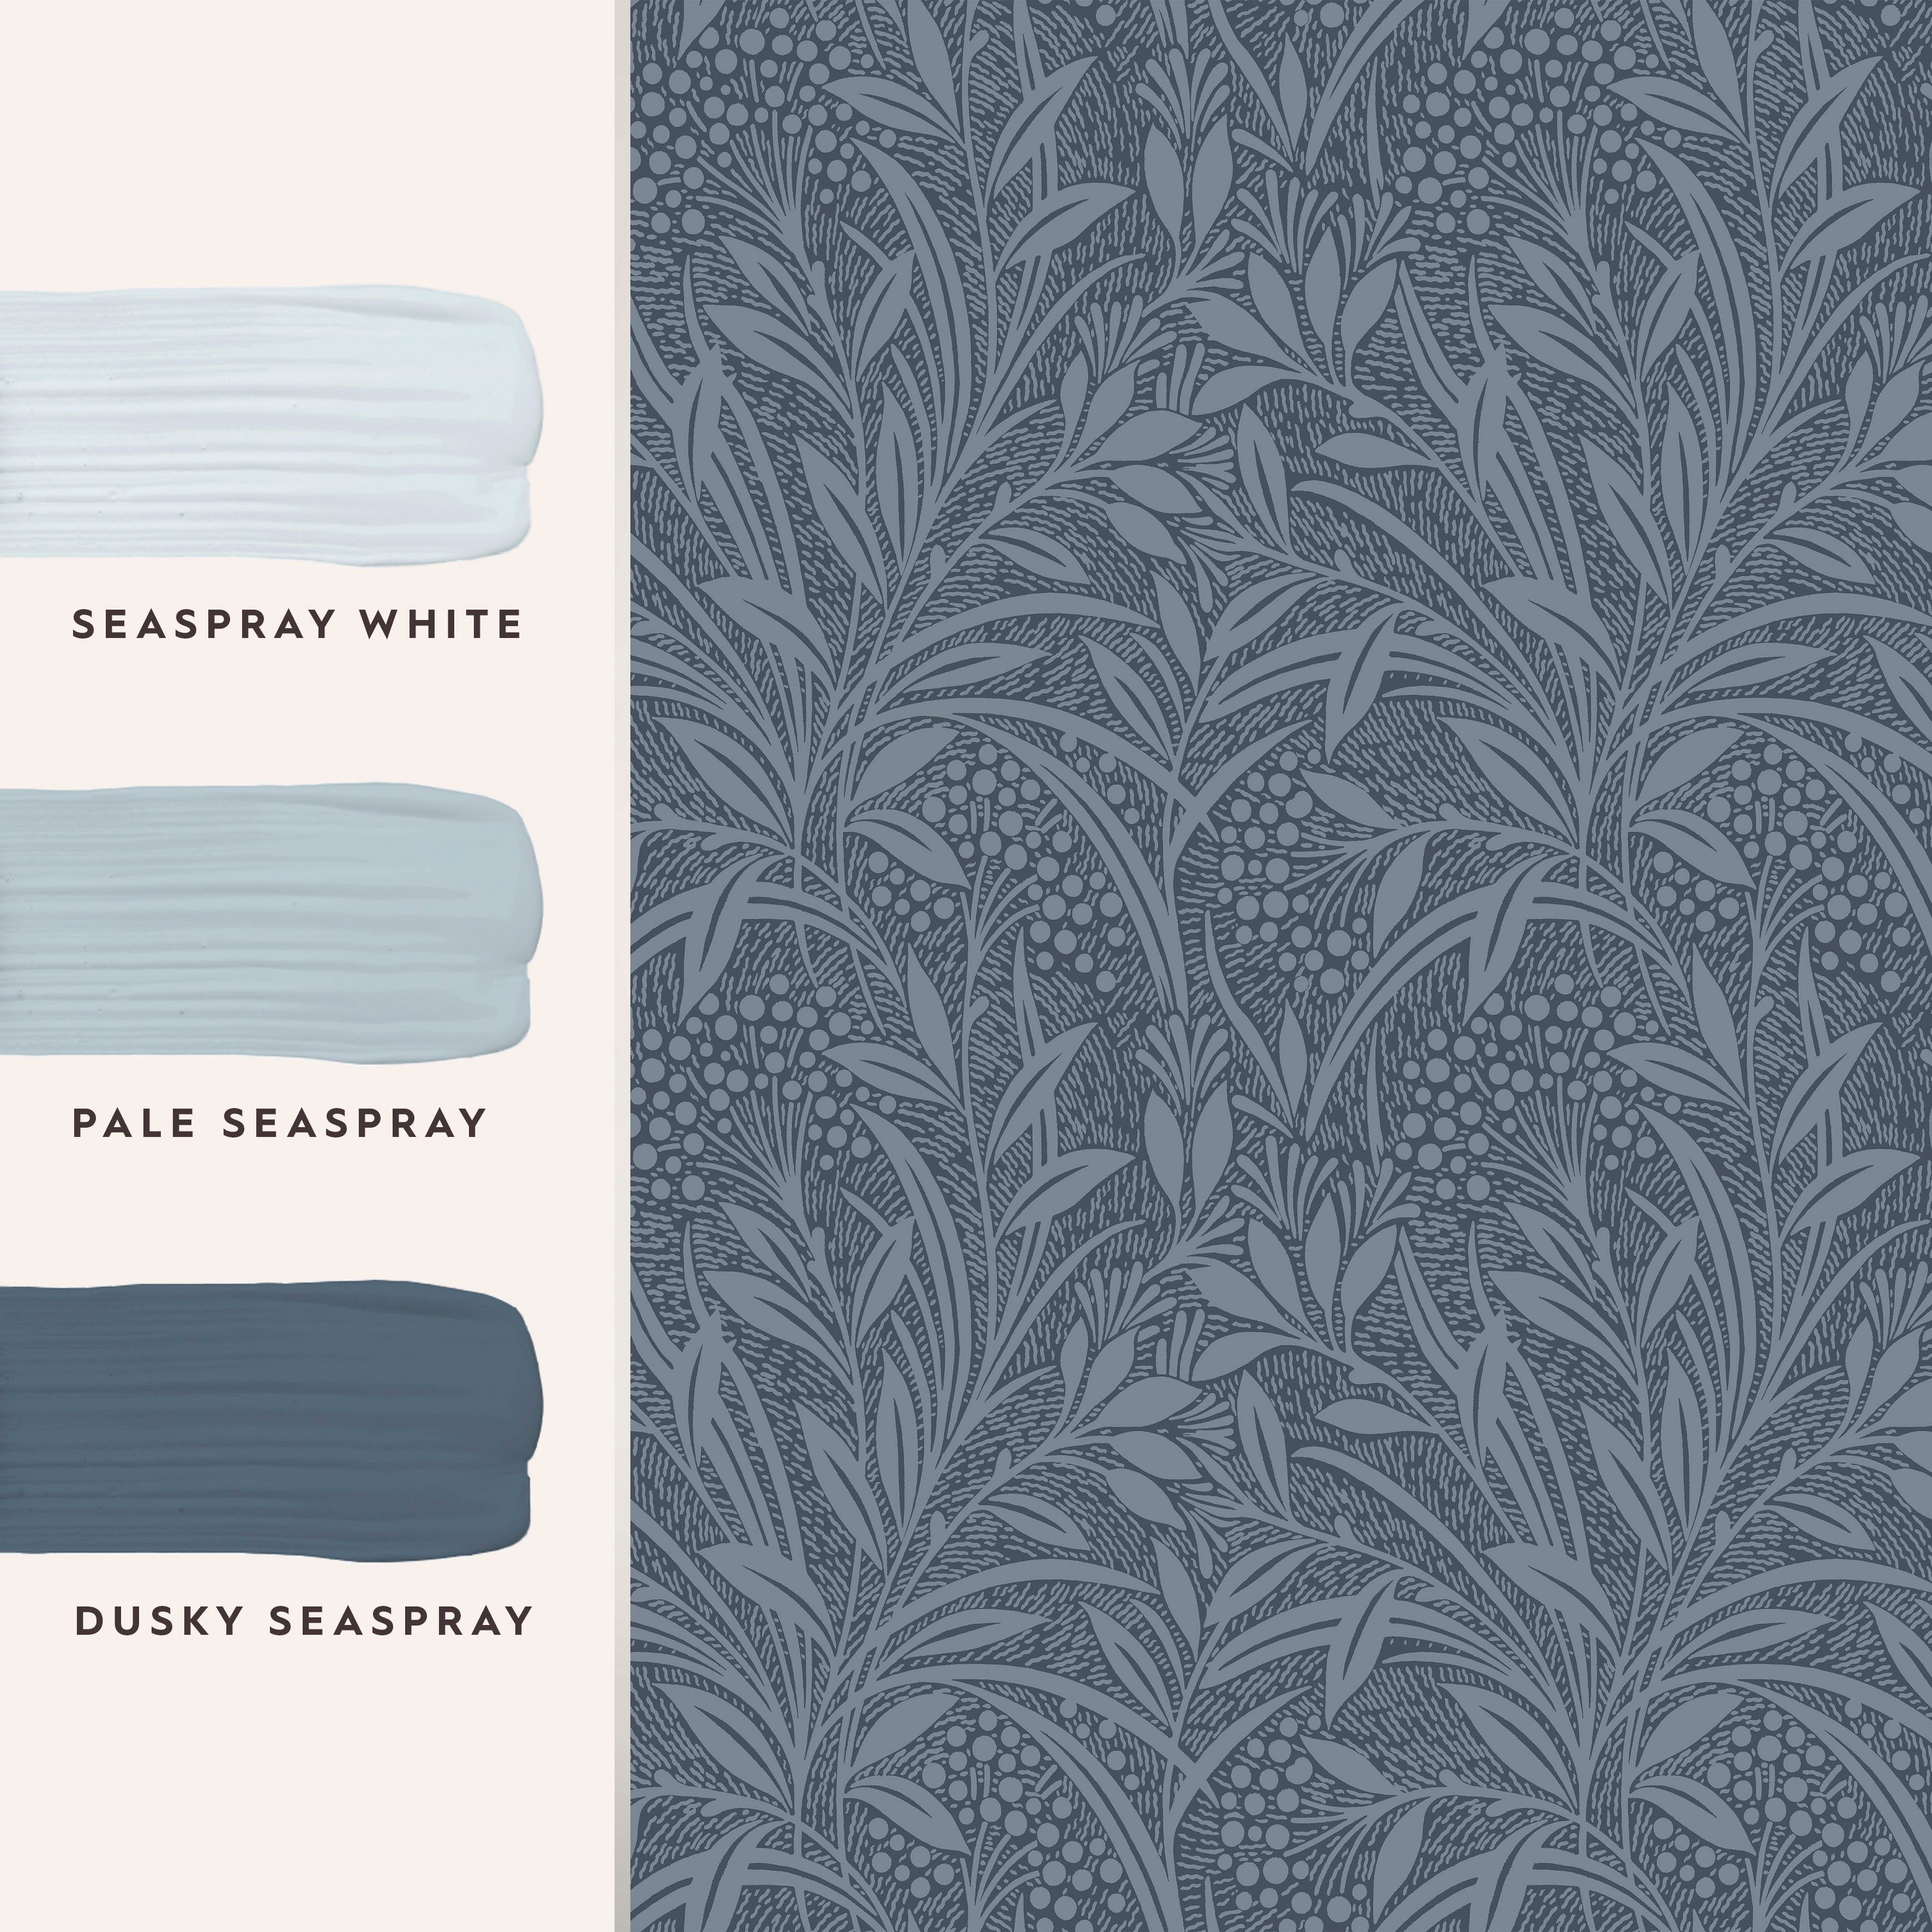 LAURA ASHLEY Wandfarbe Fine White EMULSION Seaspray matt, shades, L 2,5 Quality Paint MATT blue